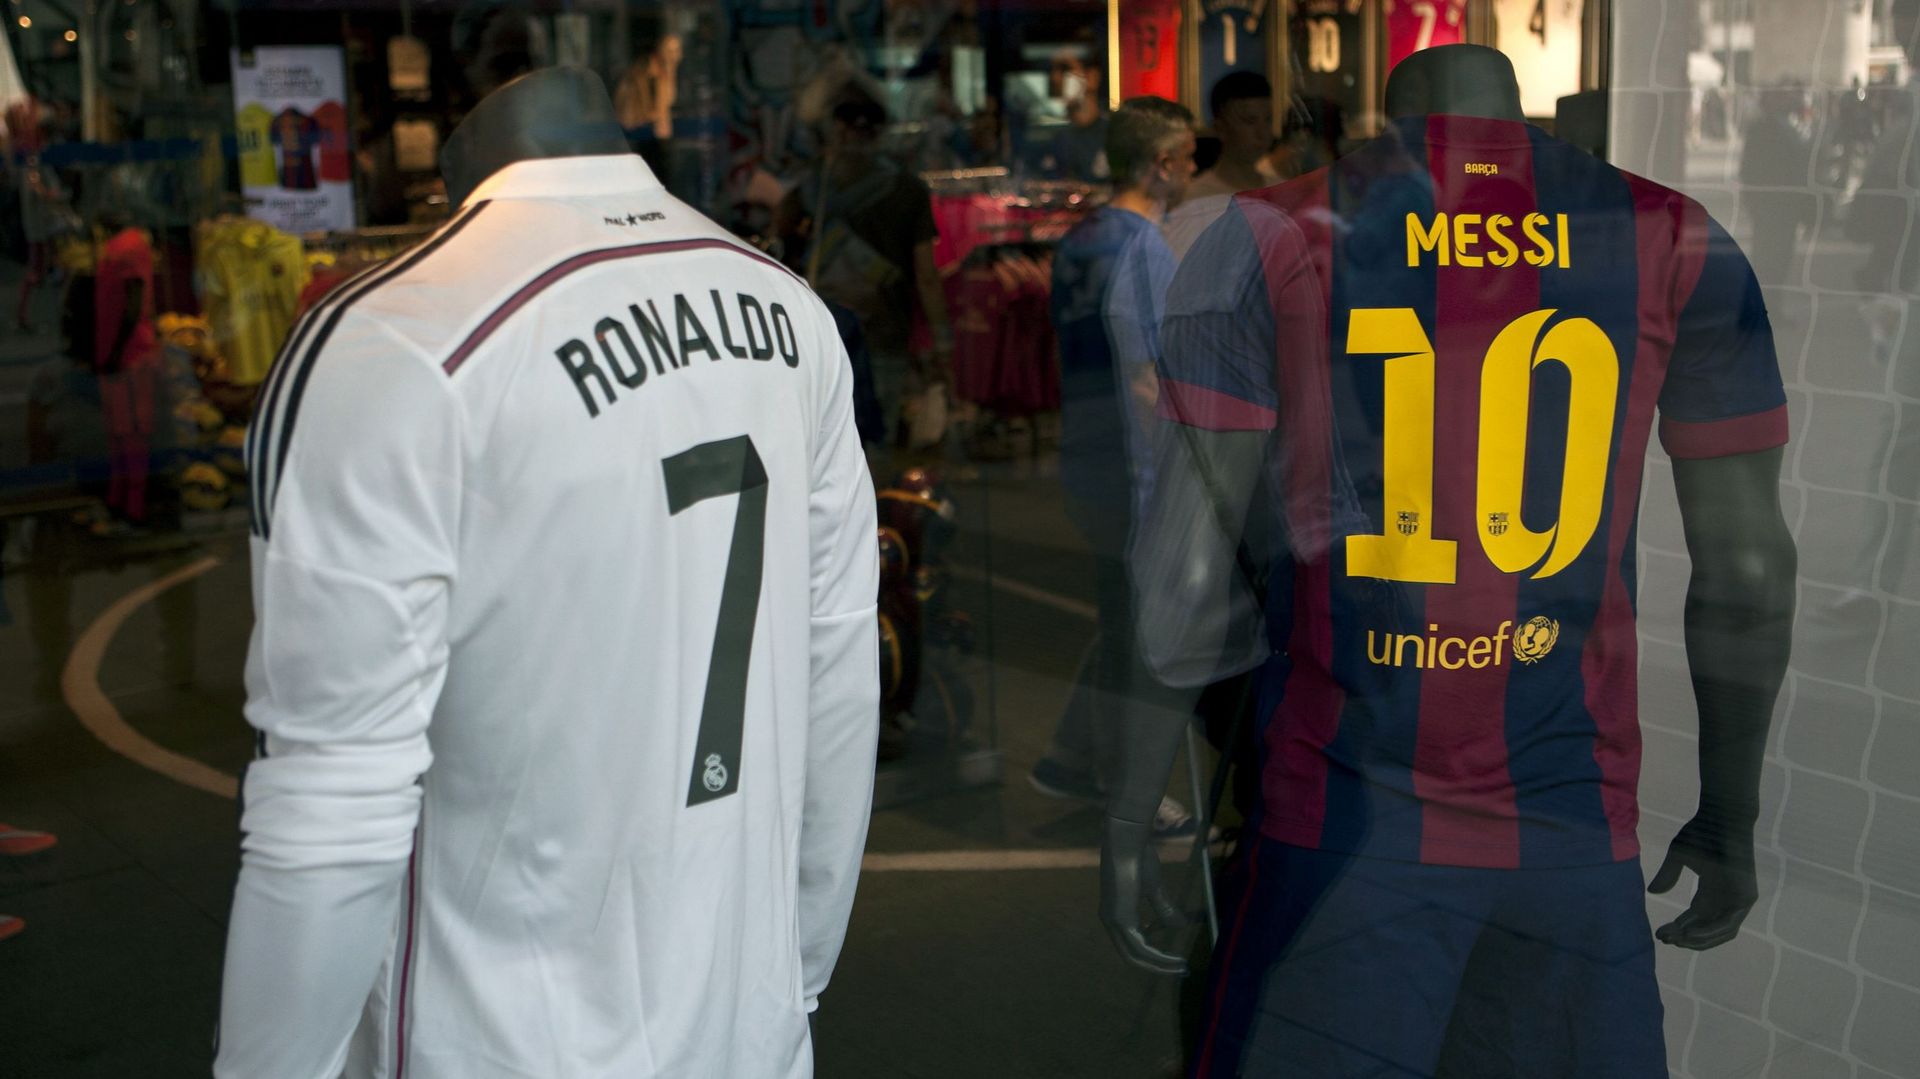 Les maillots de Cristiano Ronaldo et Lionel Messi